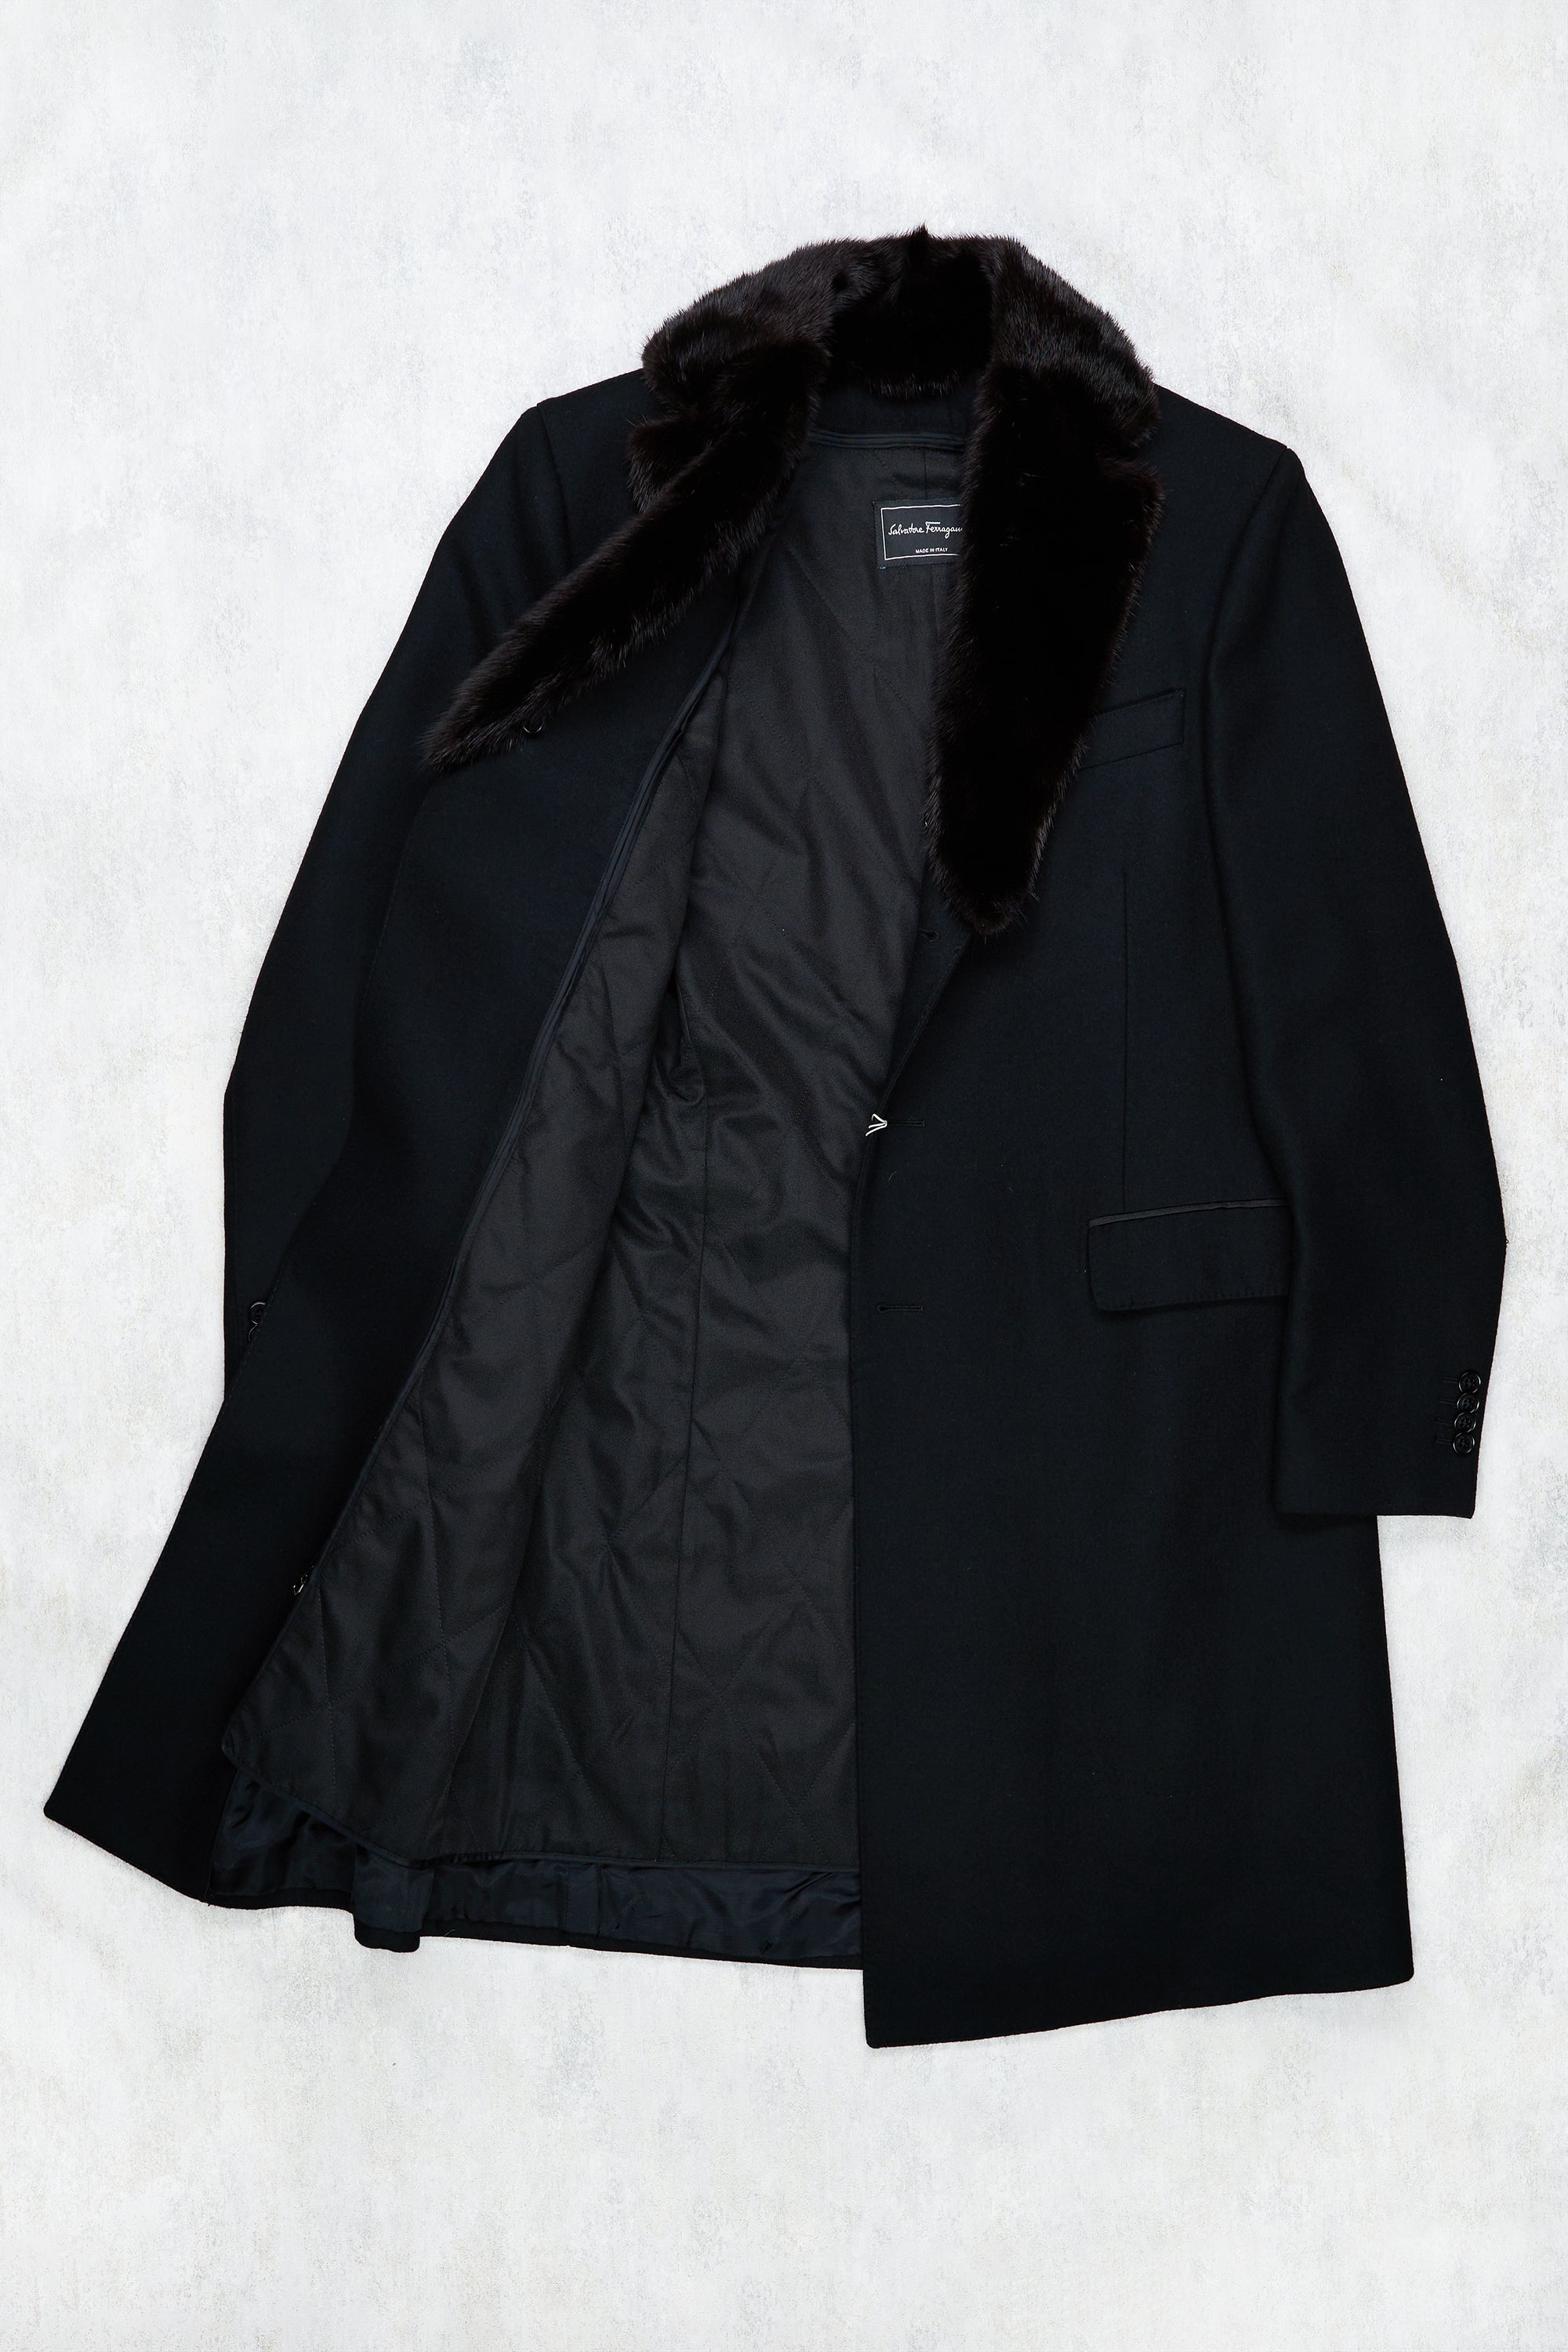 Salvatore Ferragamo Black Wool Overcoat with Detachable Fur Lapel